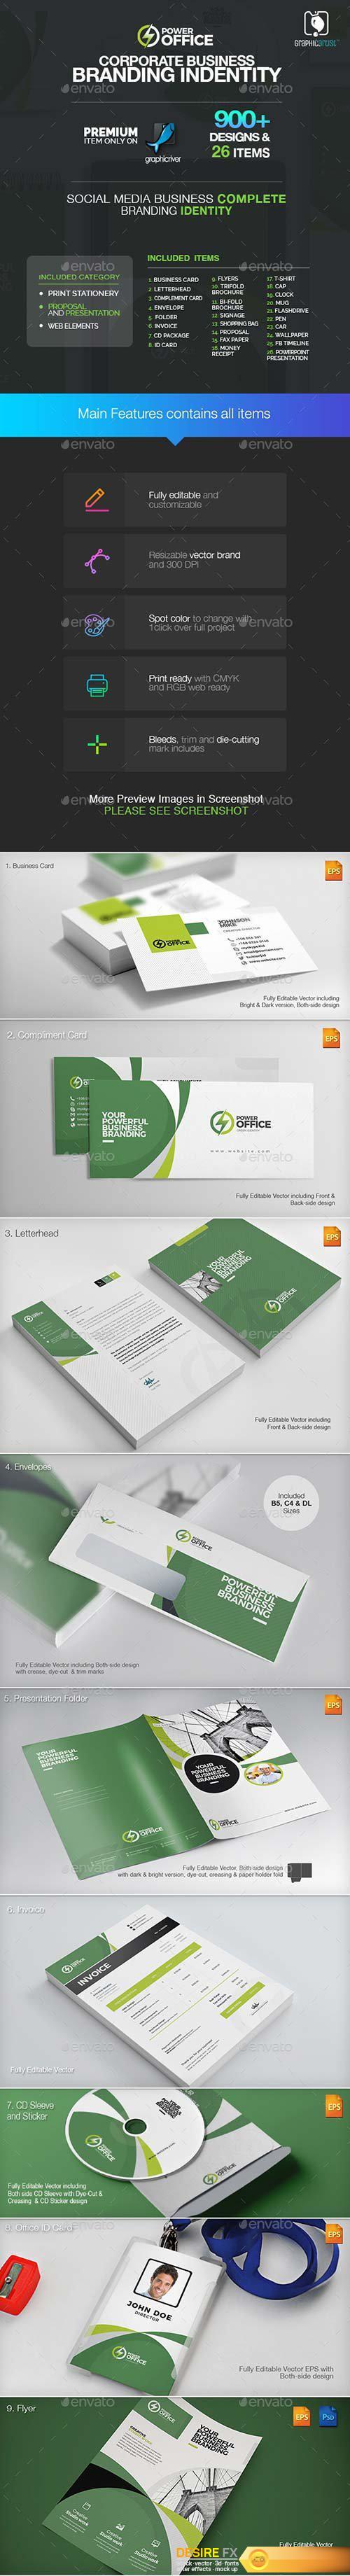 Graphicriver - Corporate Business Branding Identity 20052688